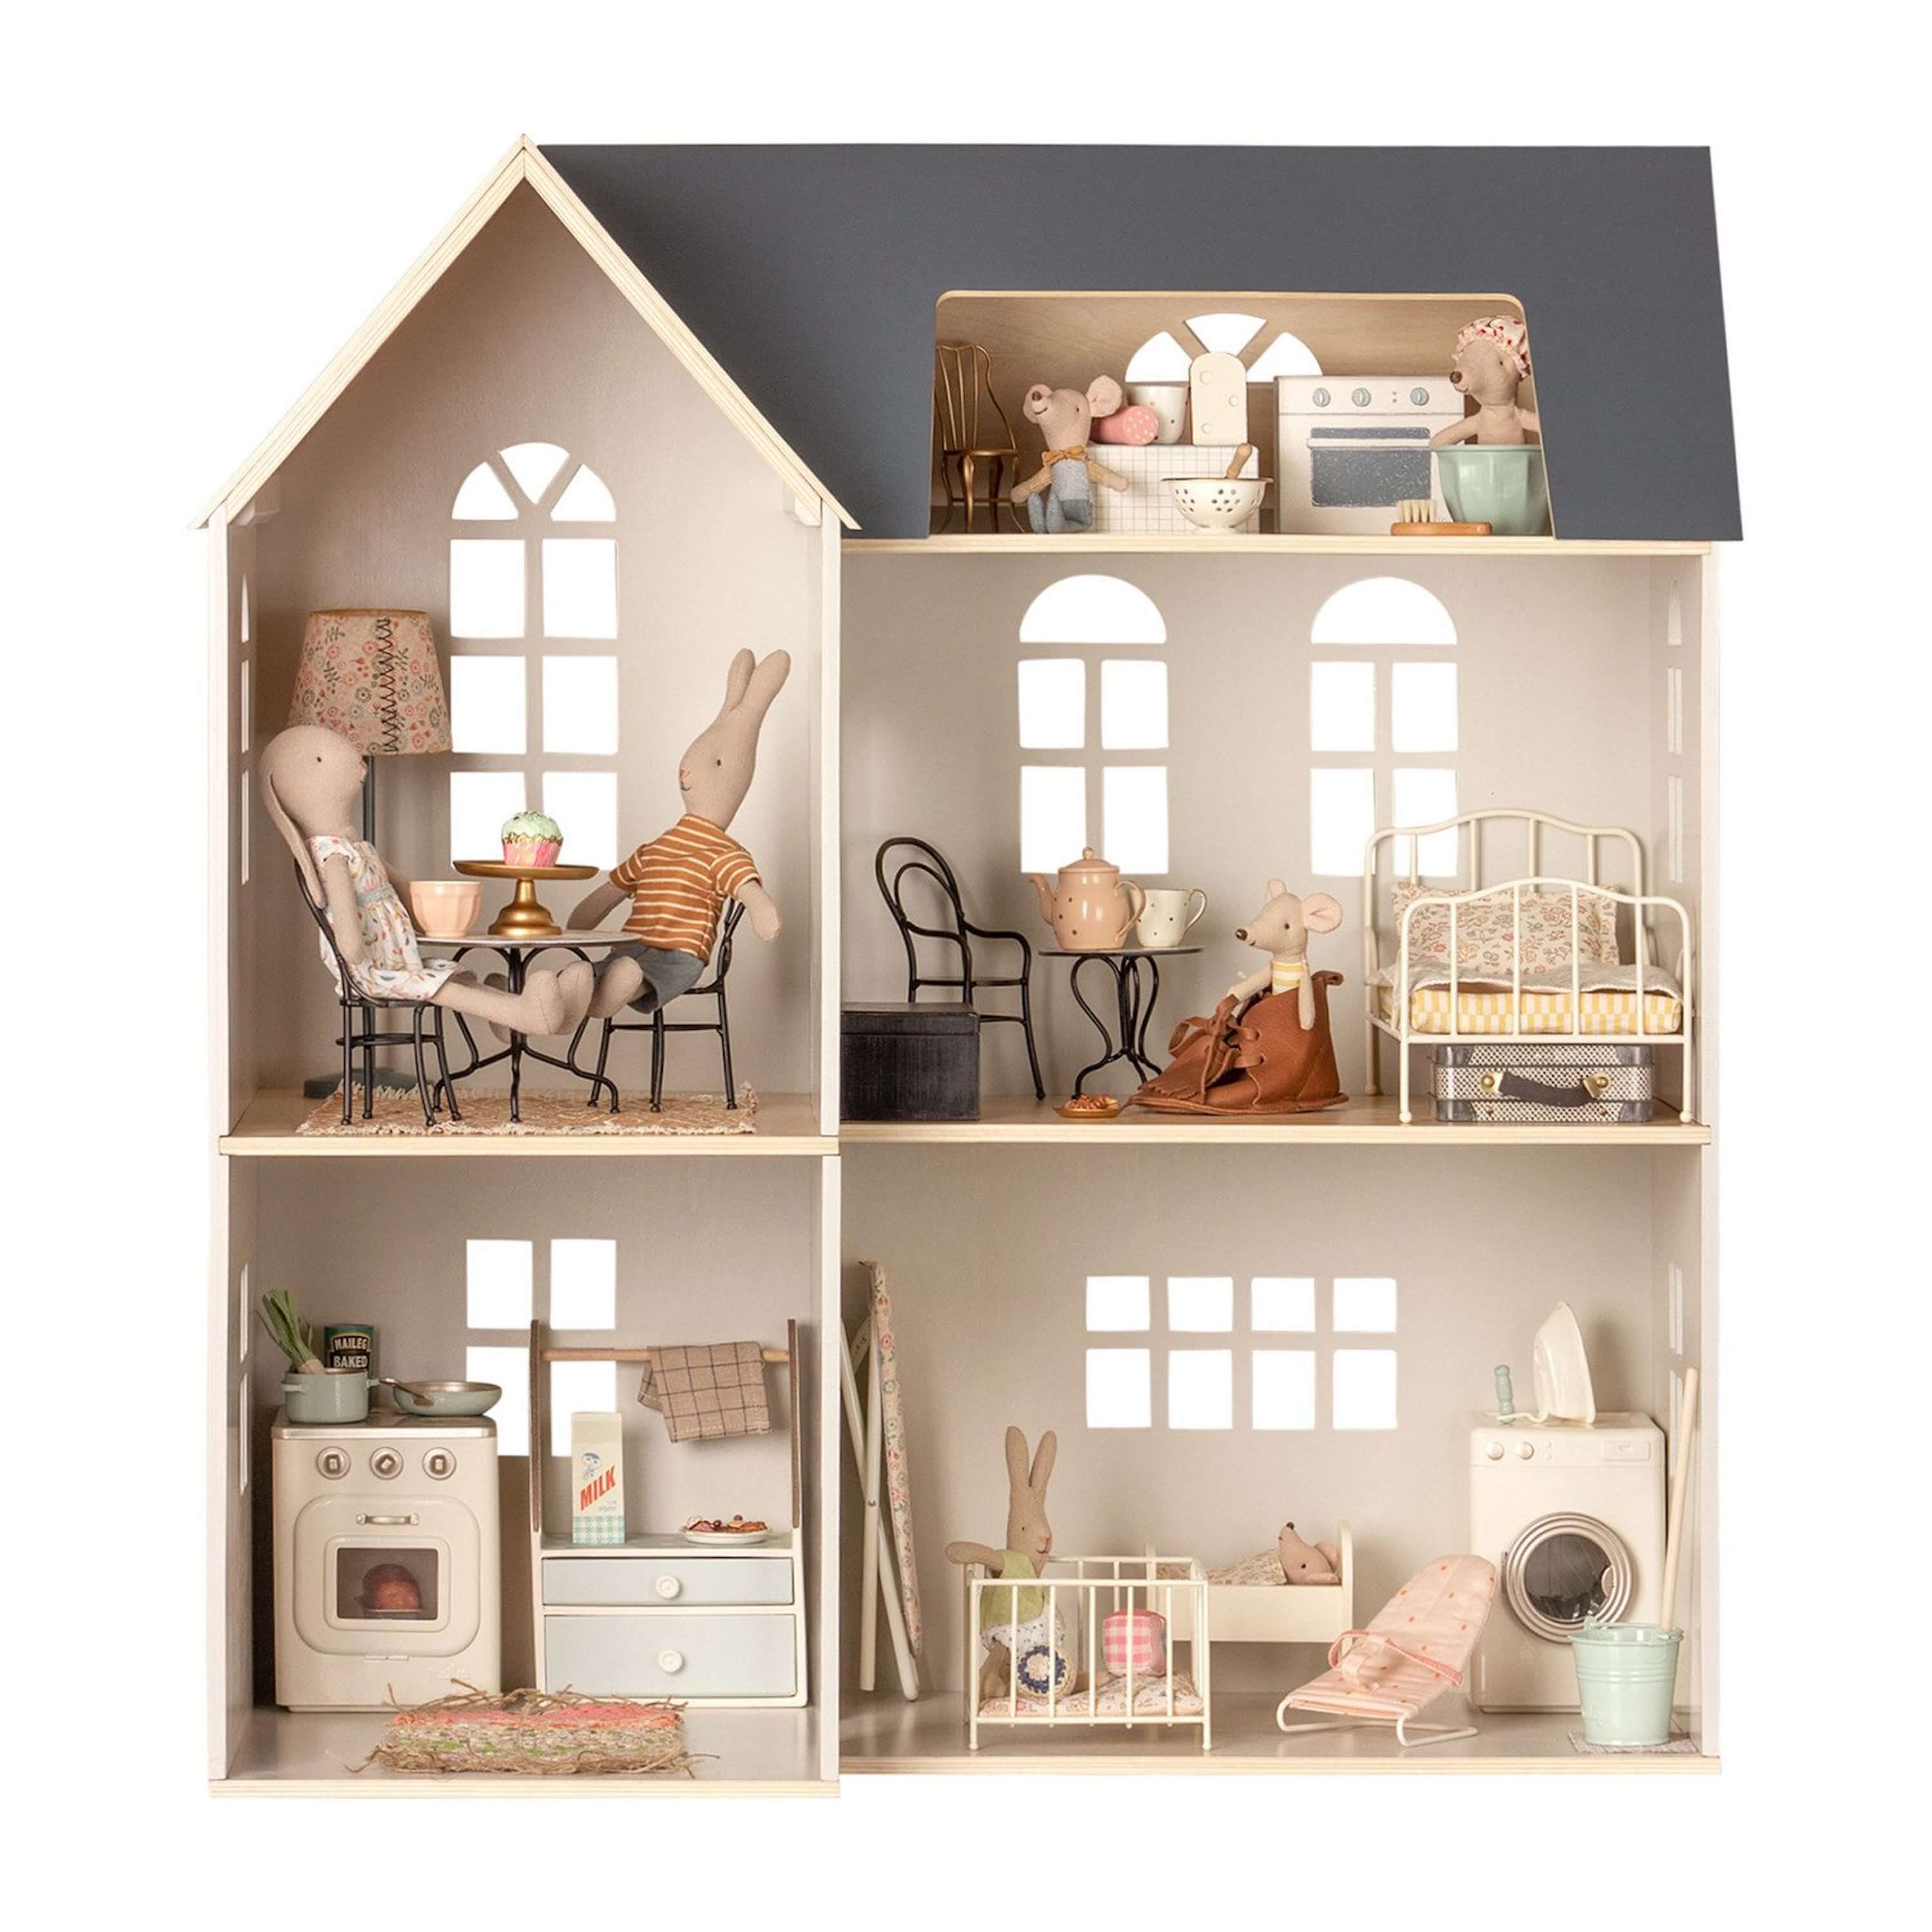 Maileg House of Miniature Ultimate Dollhouse